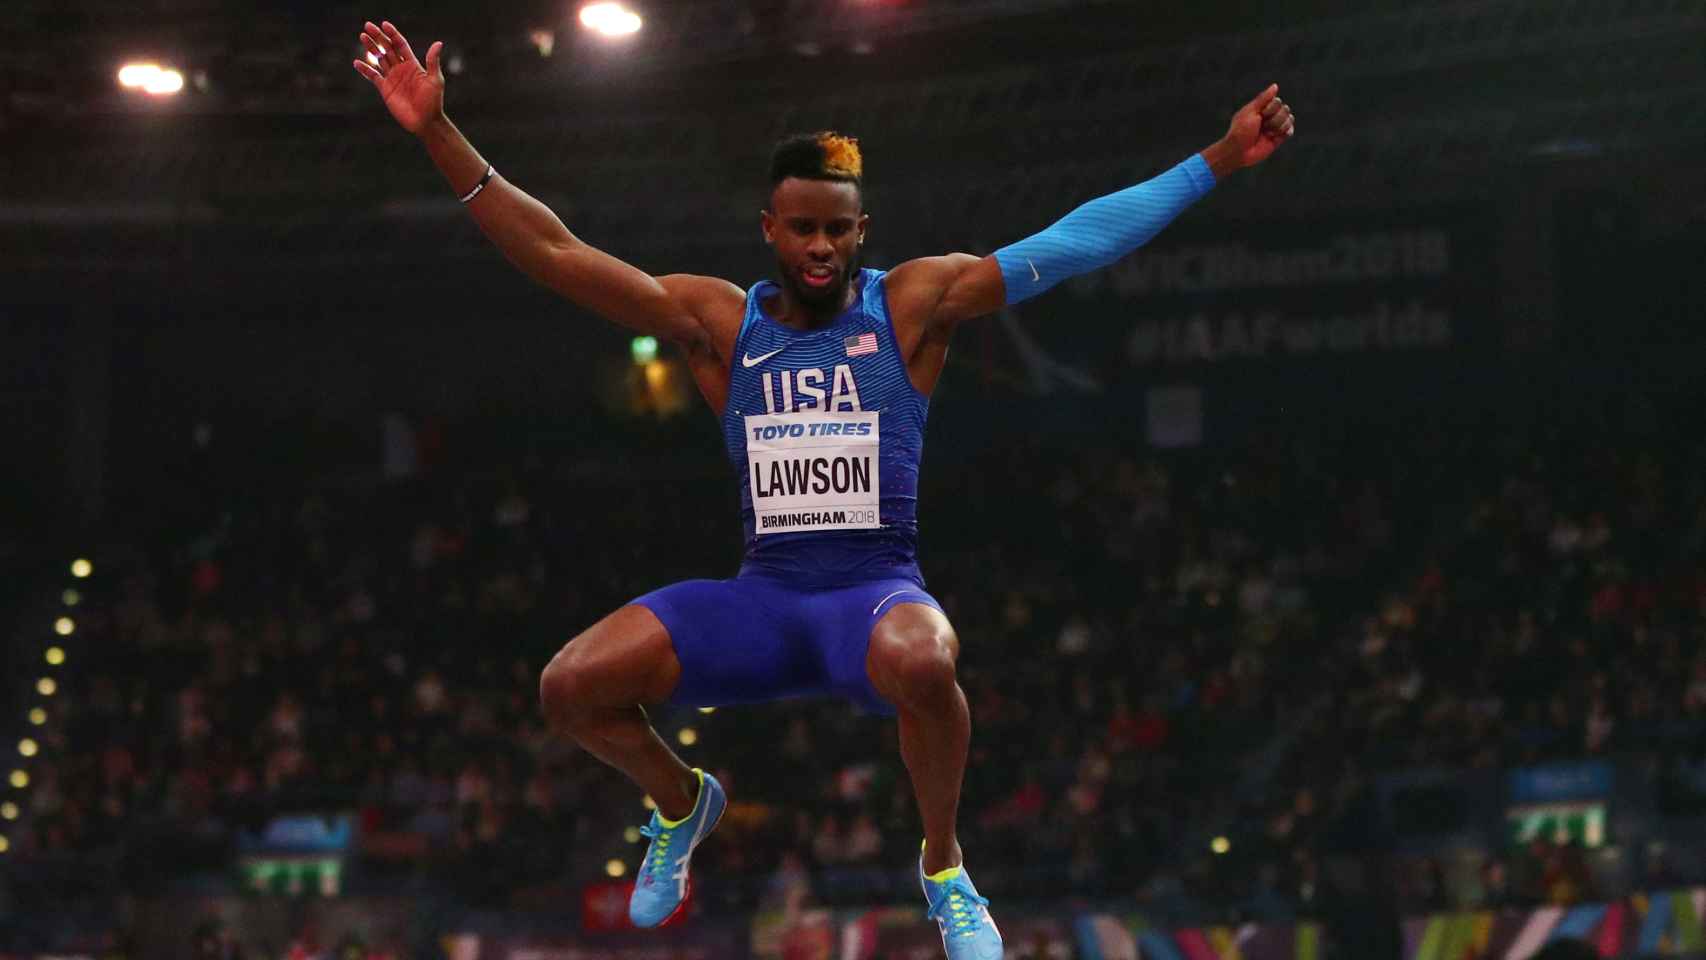 Lawson, atleta estadounidense